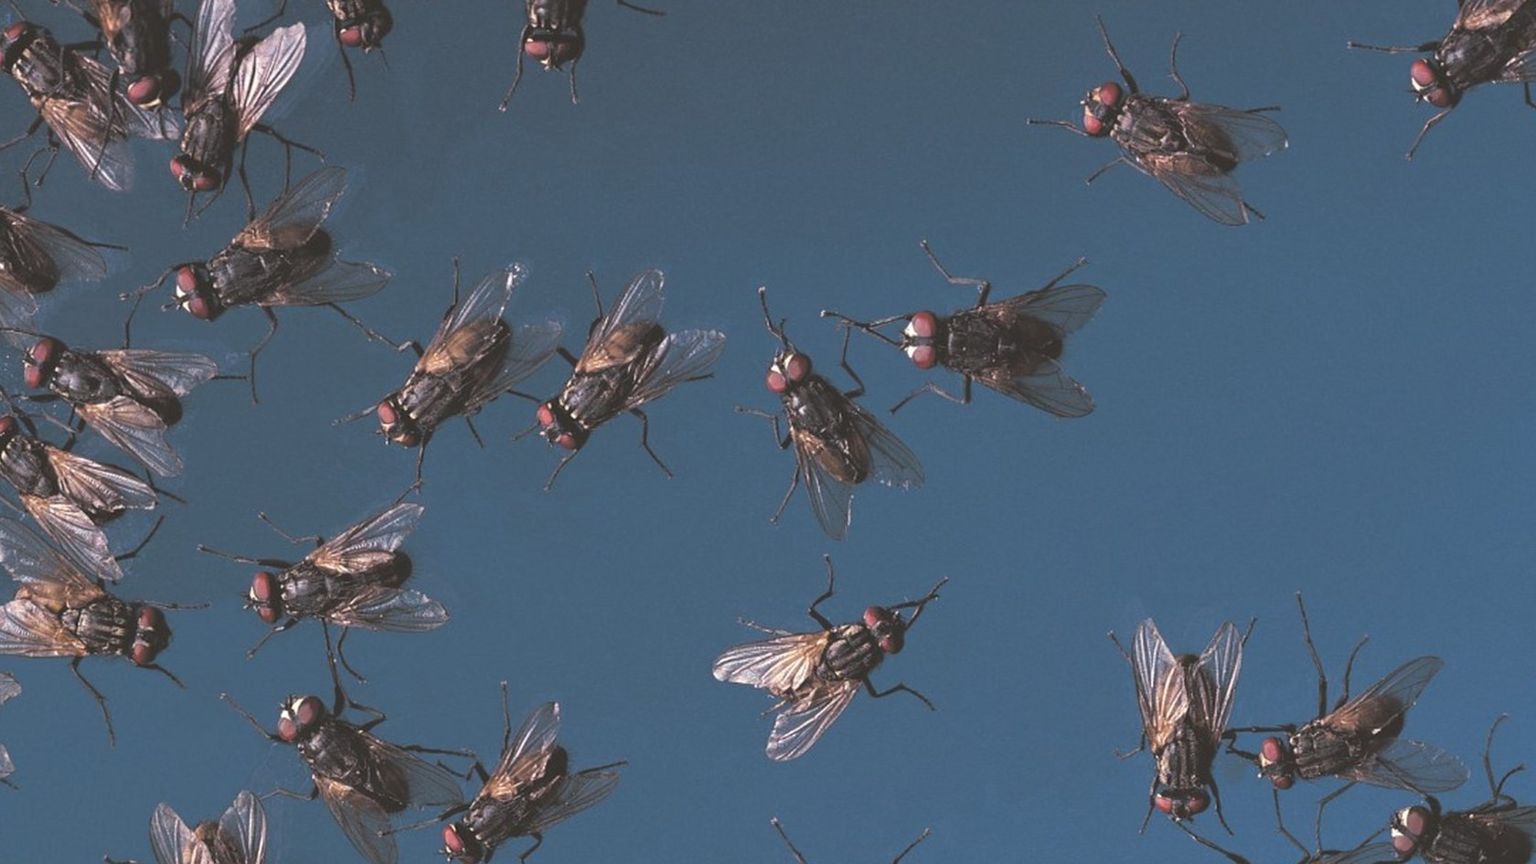 Swarm of flies